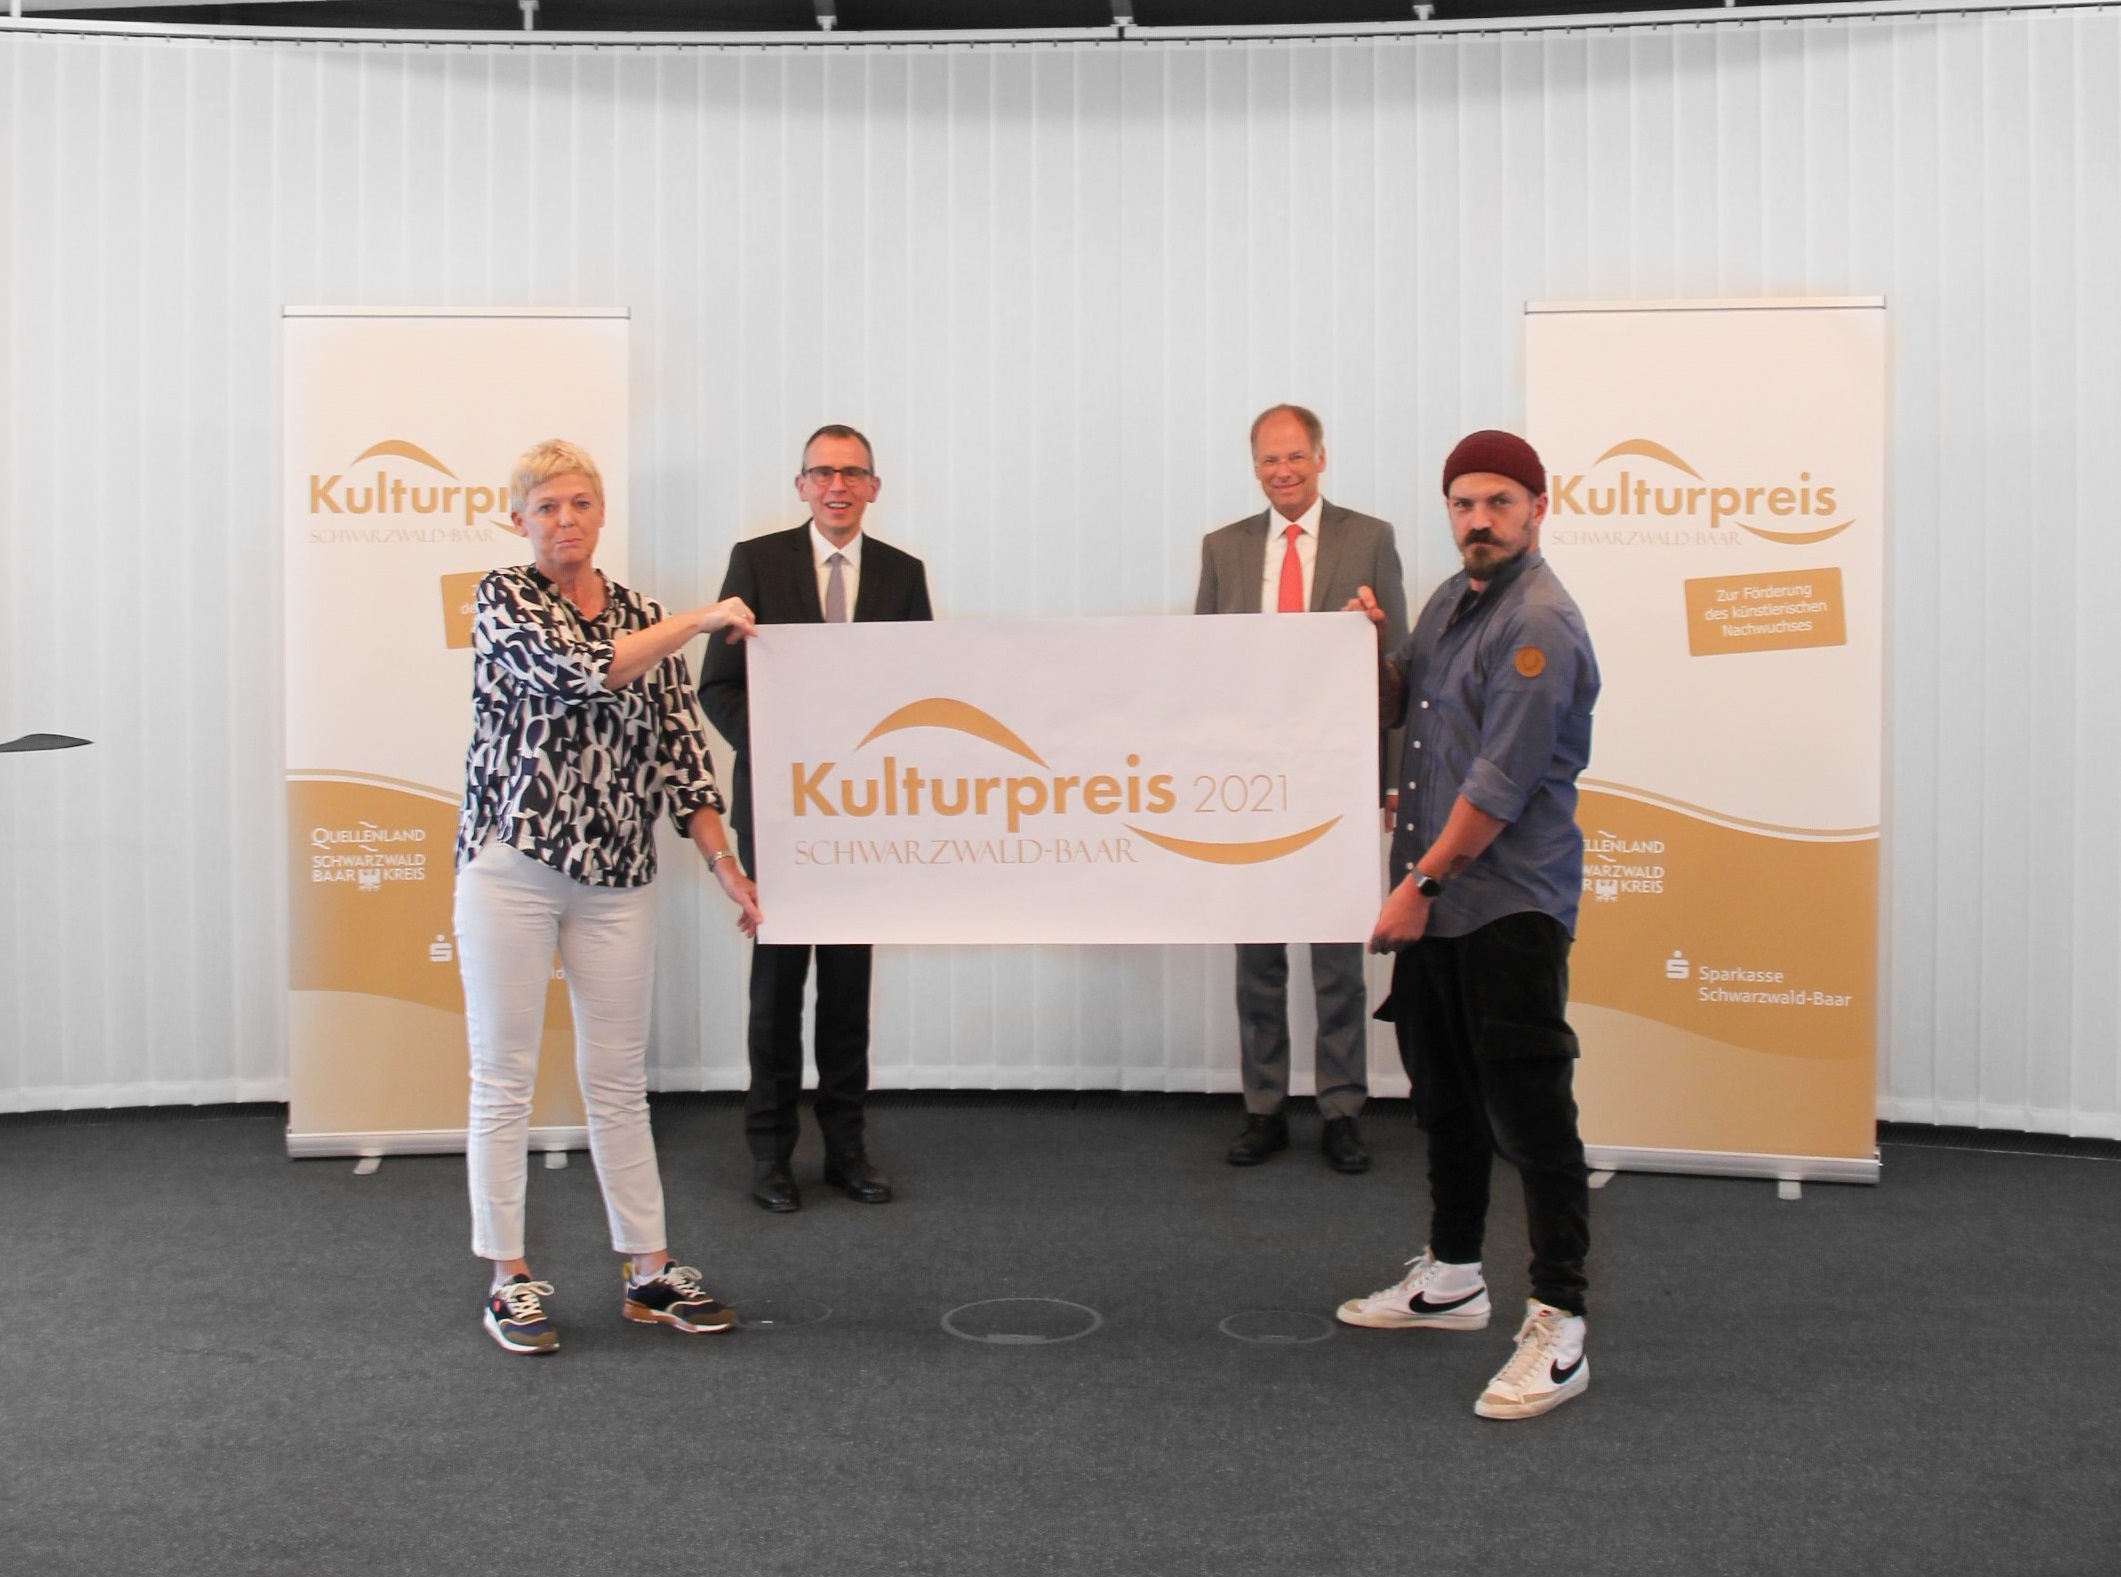 Kulturpreis Schwarzwald-Baar 2021